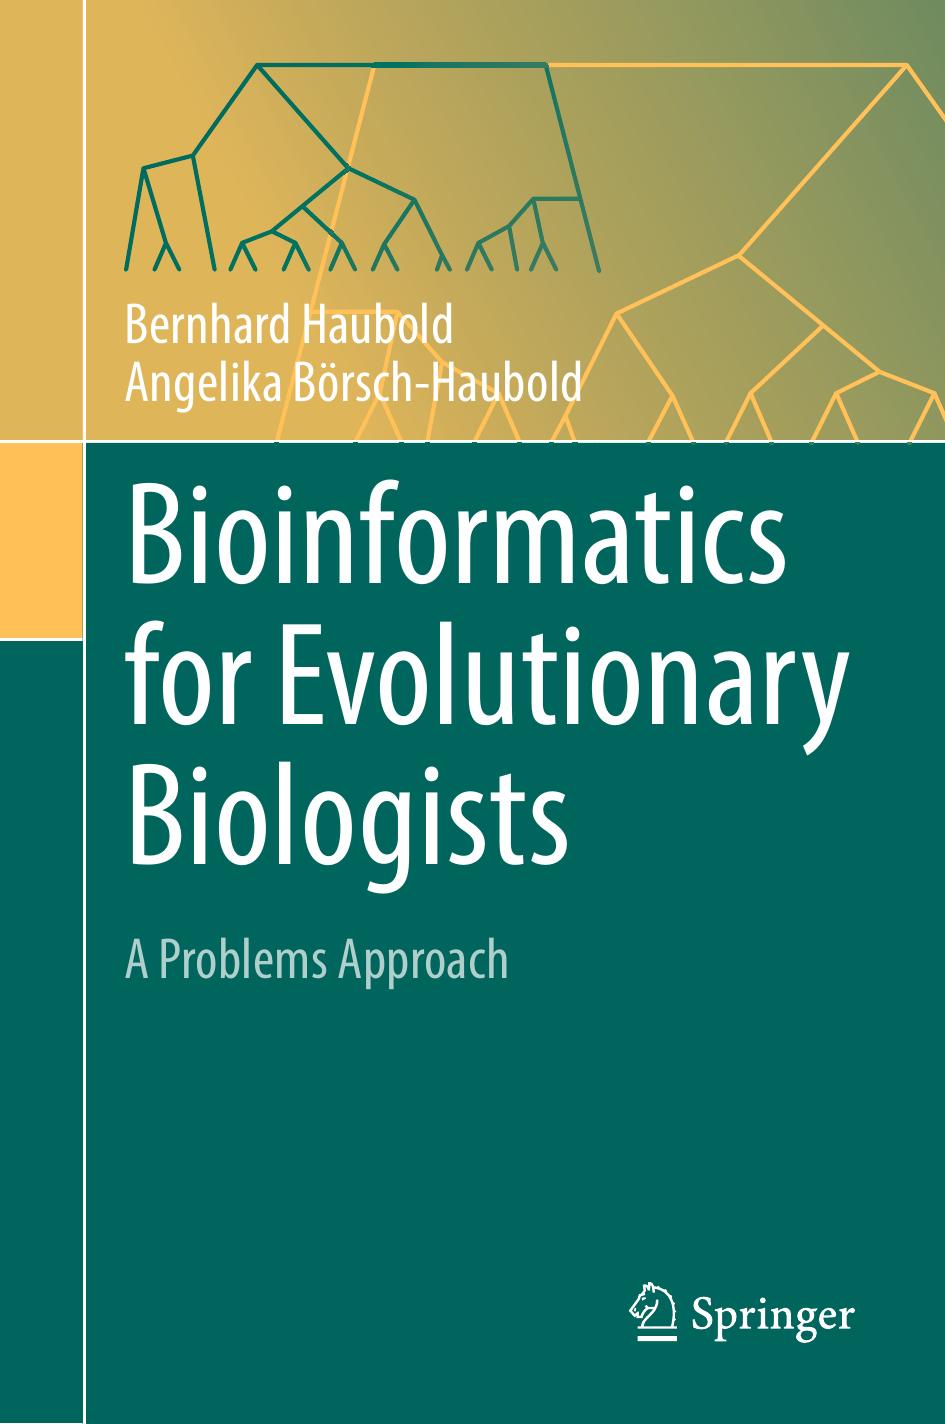 Bioinformatics for Evolutionary Biologists by Bernhard Haubold & Angelika Börsch-Haubold